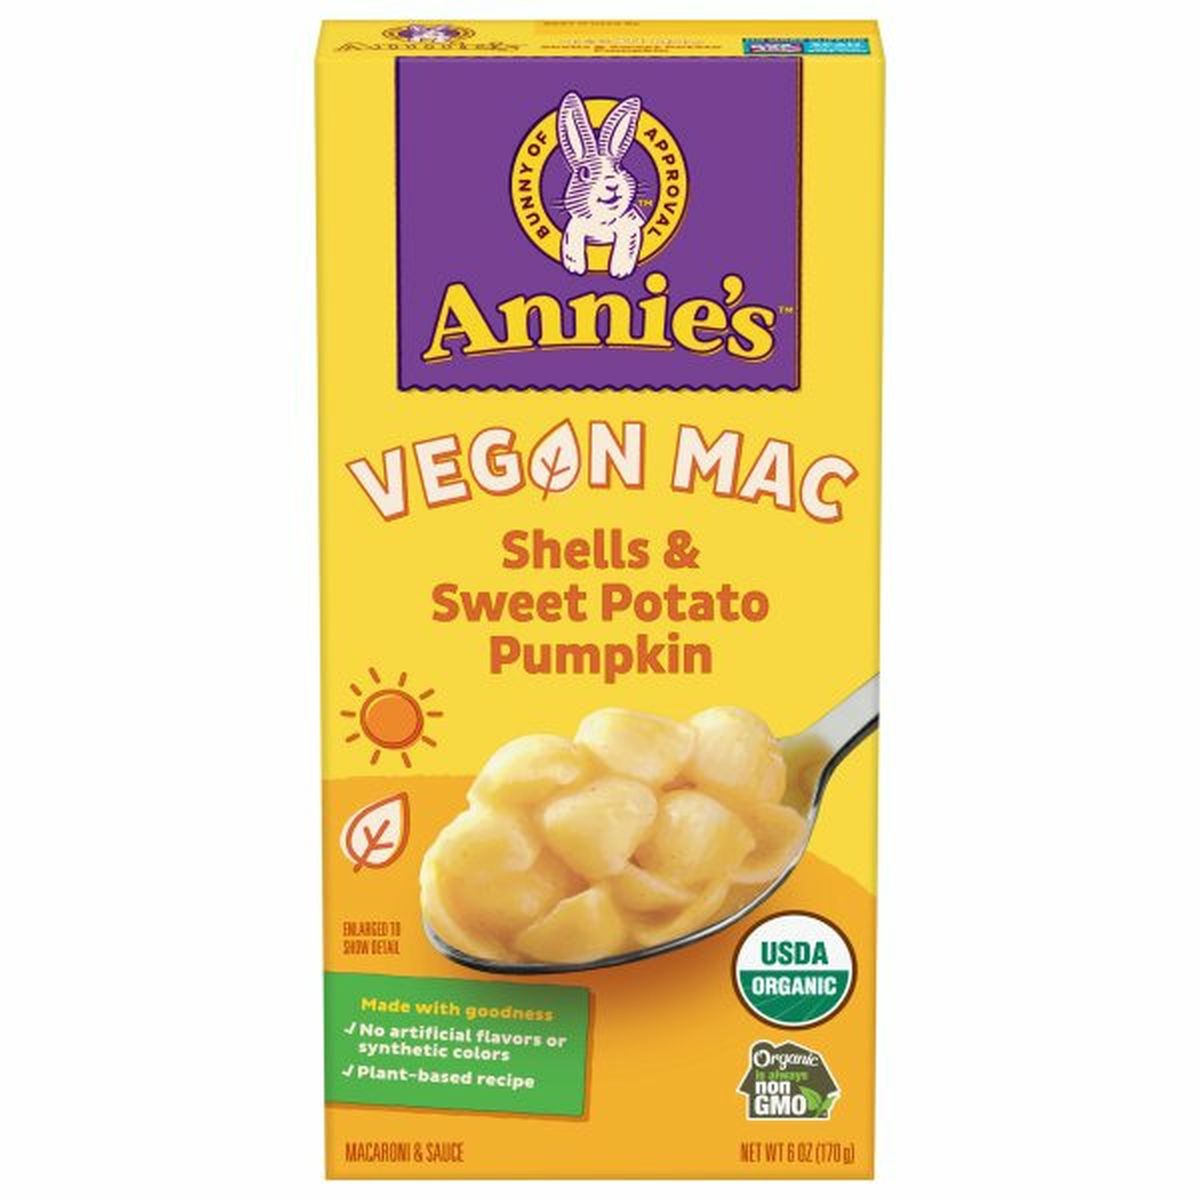 Calories in Annie's Vegan Mac Macaroni & Sauce, Shells & Sweet Potato Pumpkin